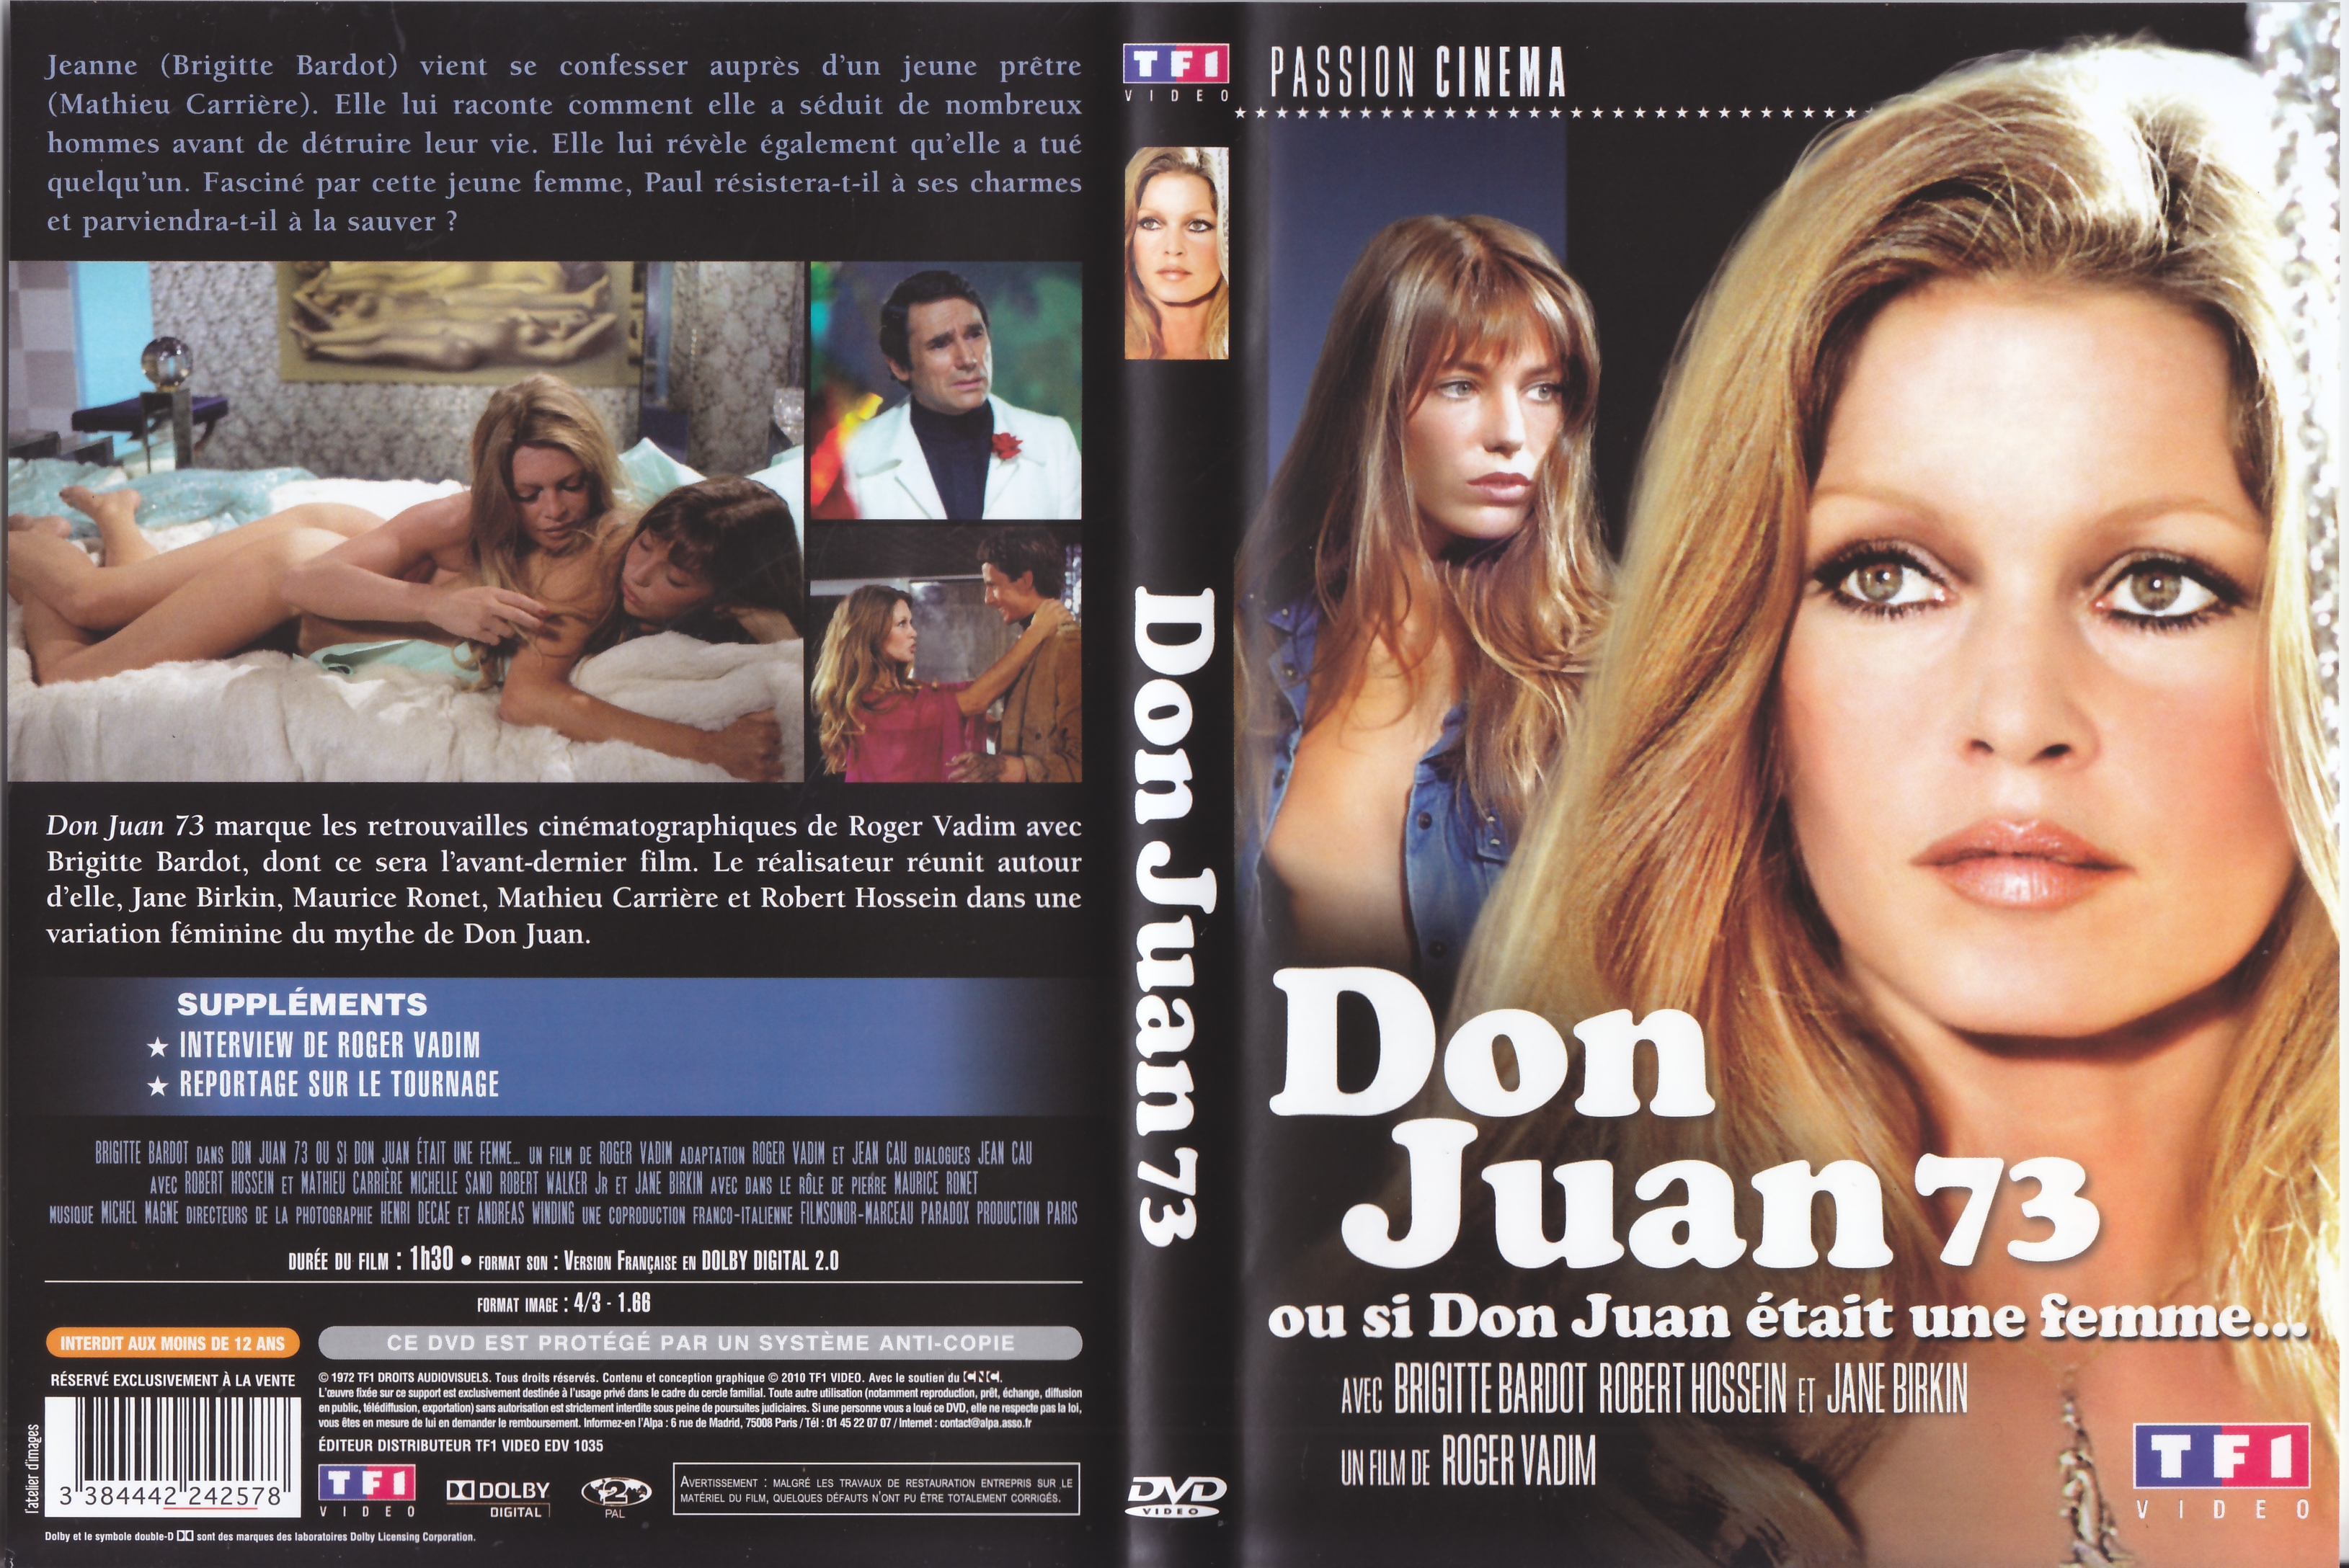 Jaquette DVD Don Juan 73